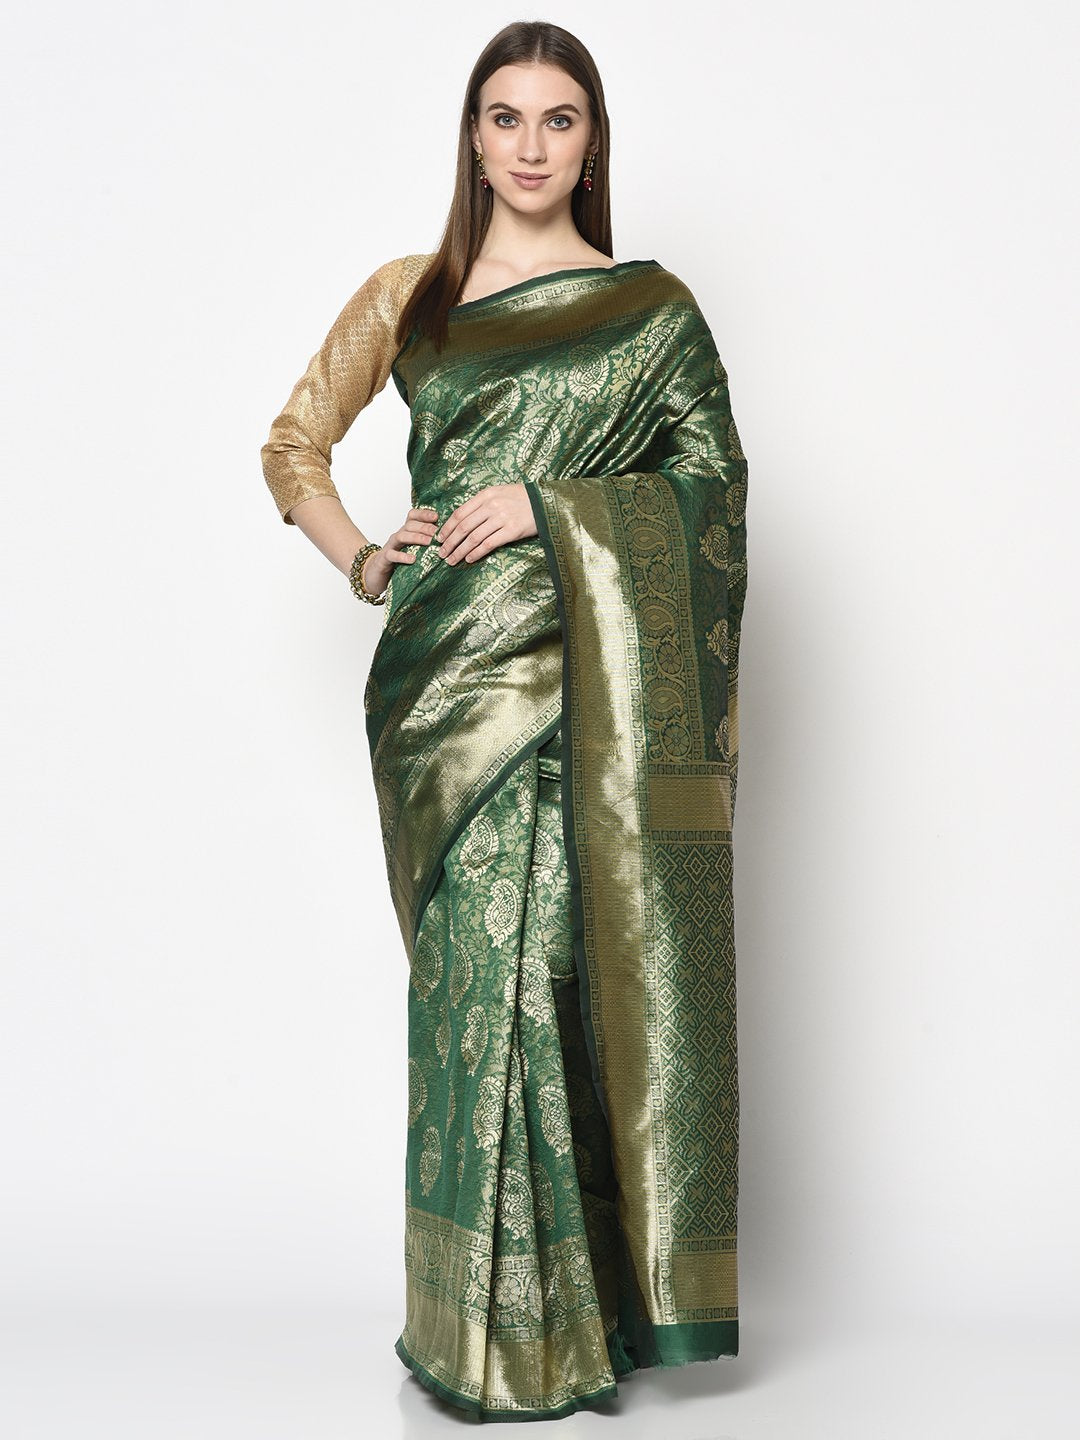 Shop Handloom Saree In Dark Green Colour which is Saree online at simaaya At